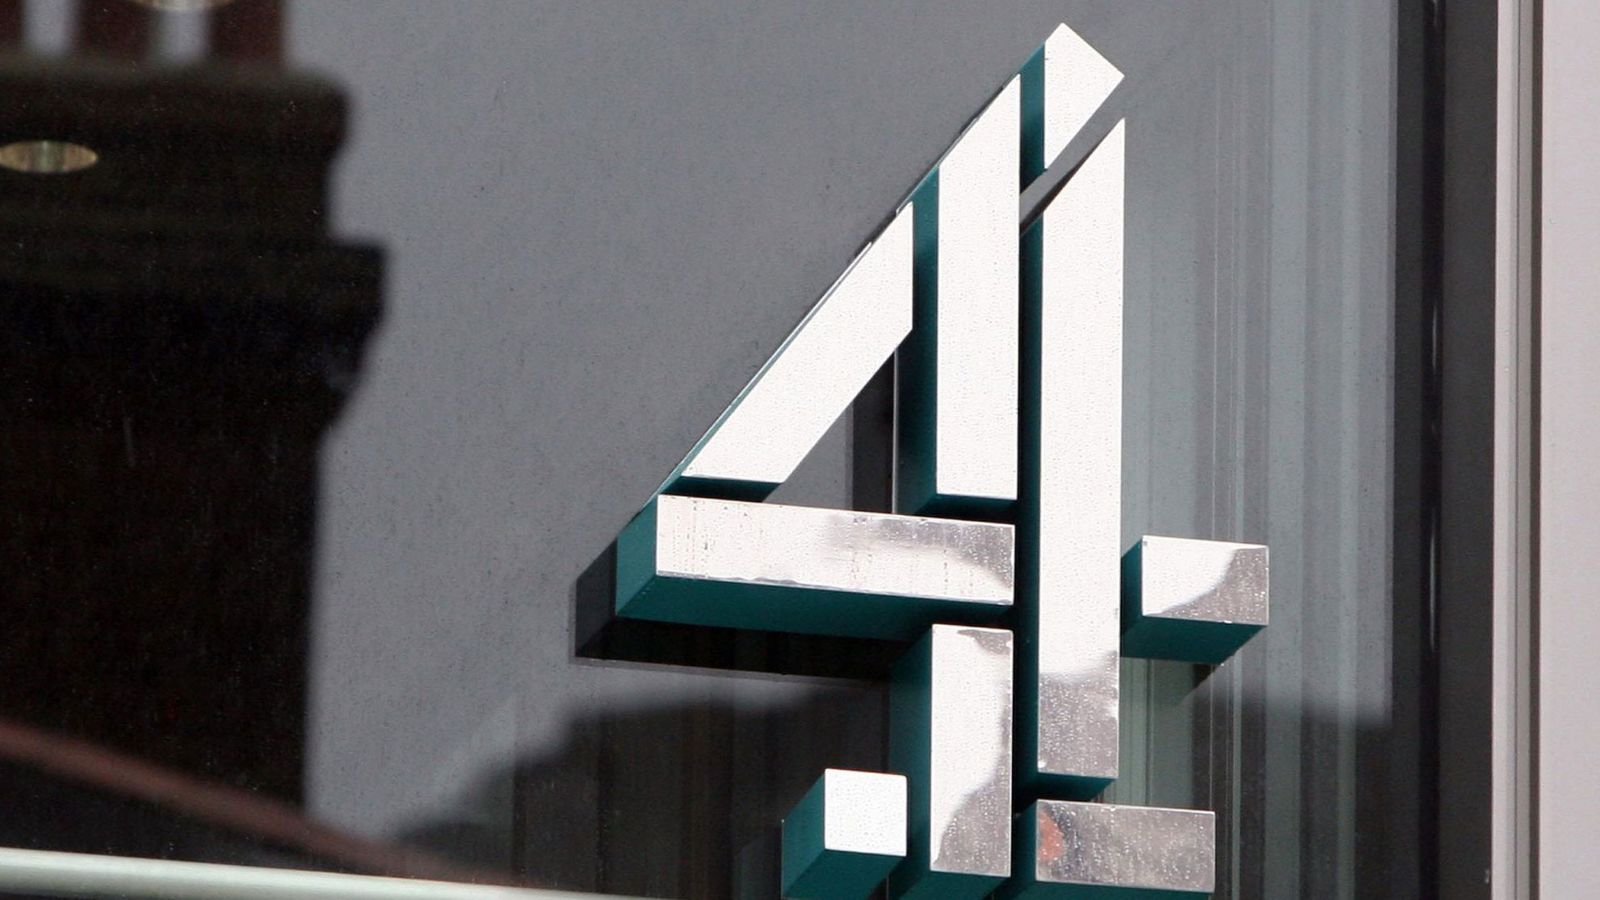 Channel 4 to unveil deeper job cuts as ad downturn bites